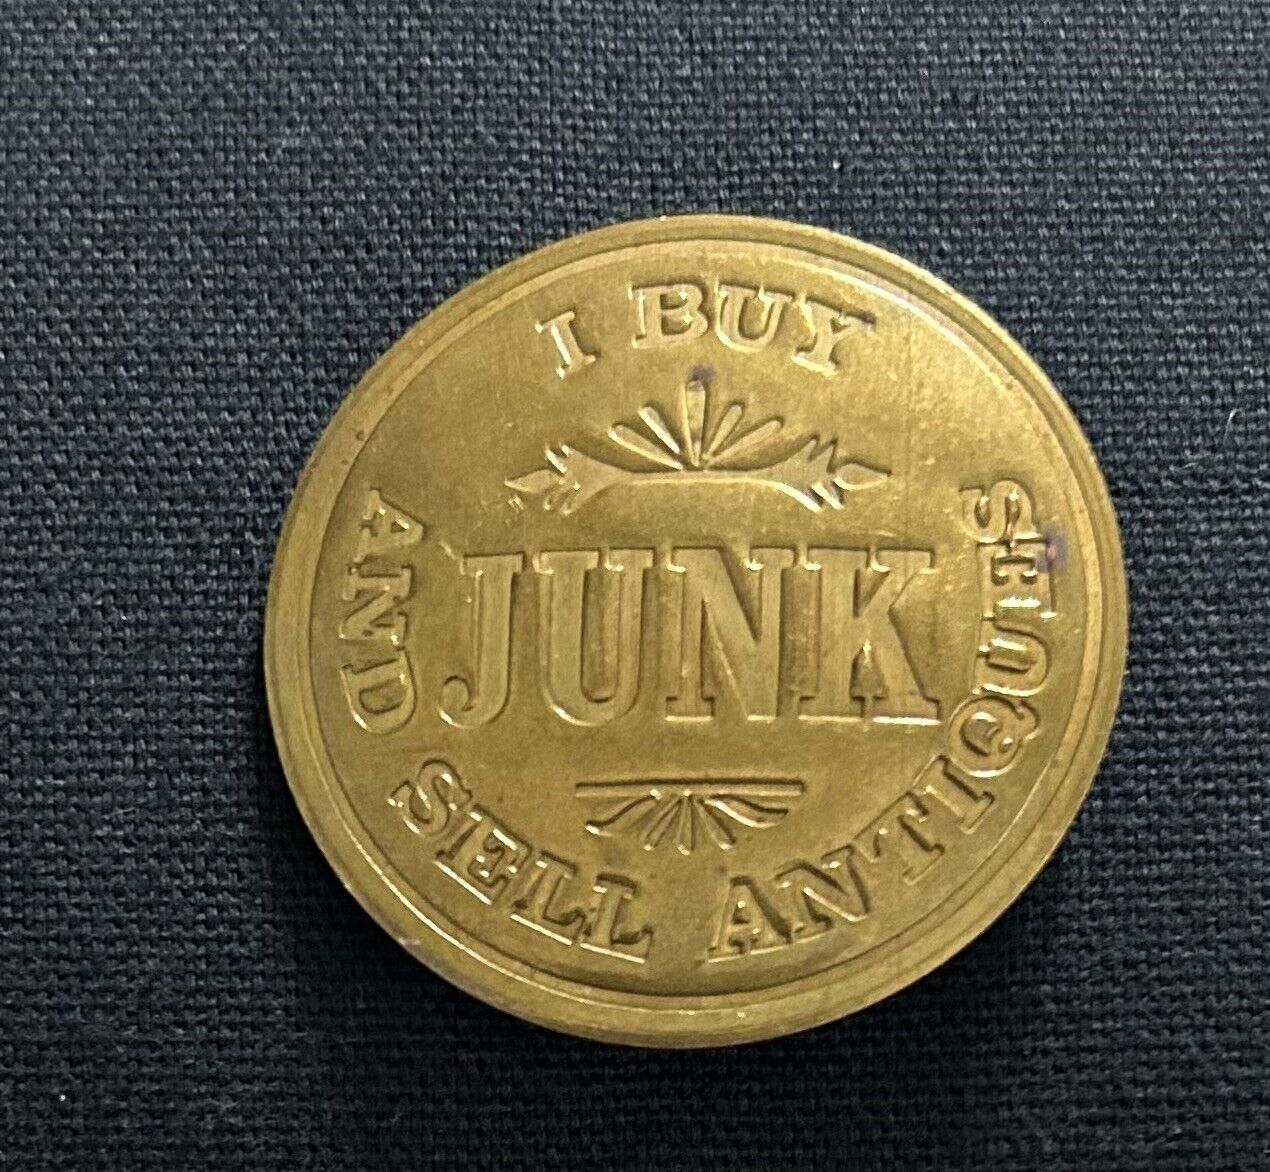 Vintage Brass Badge “ I Buy Junk & Sell Antiques